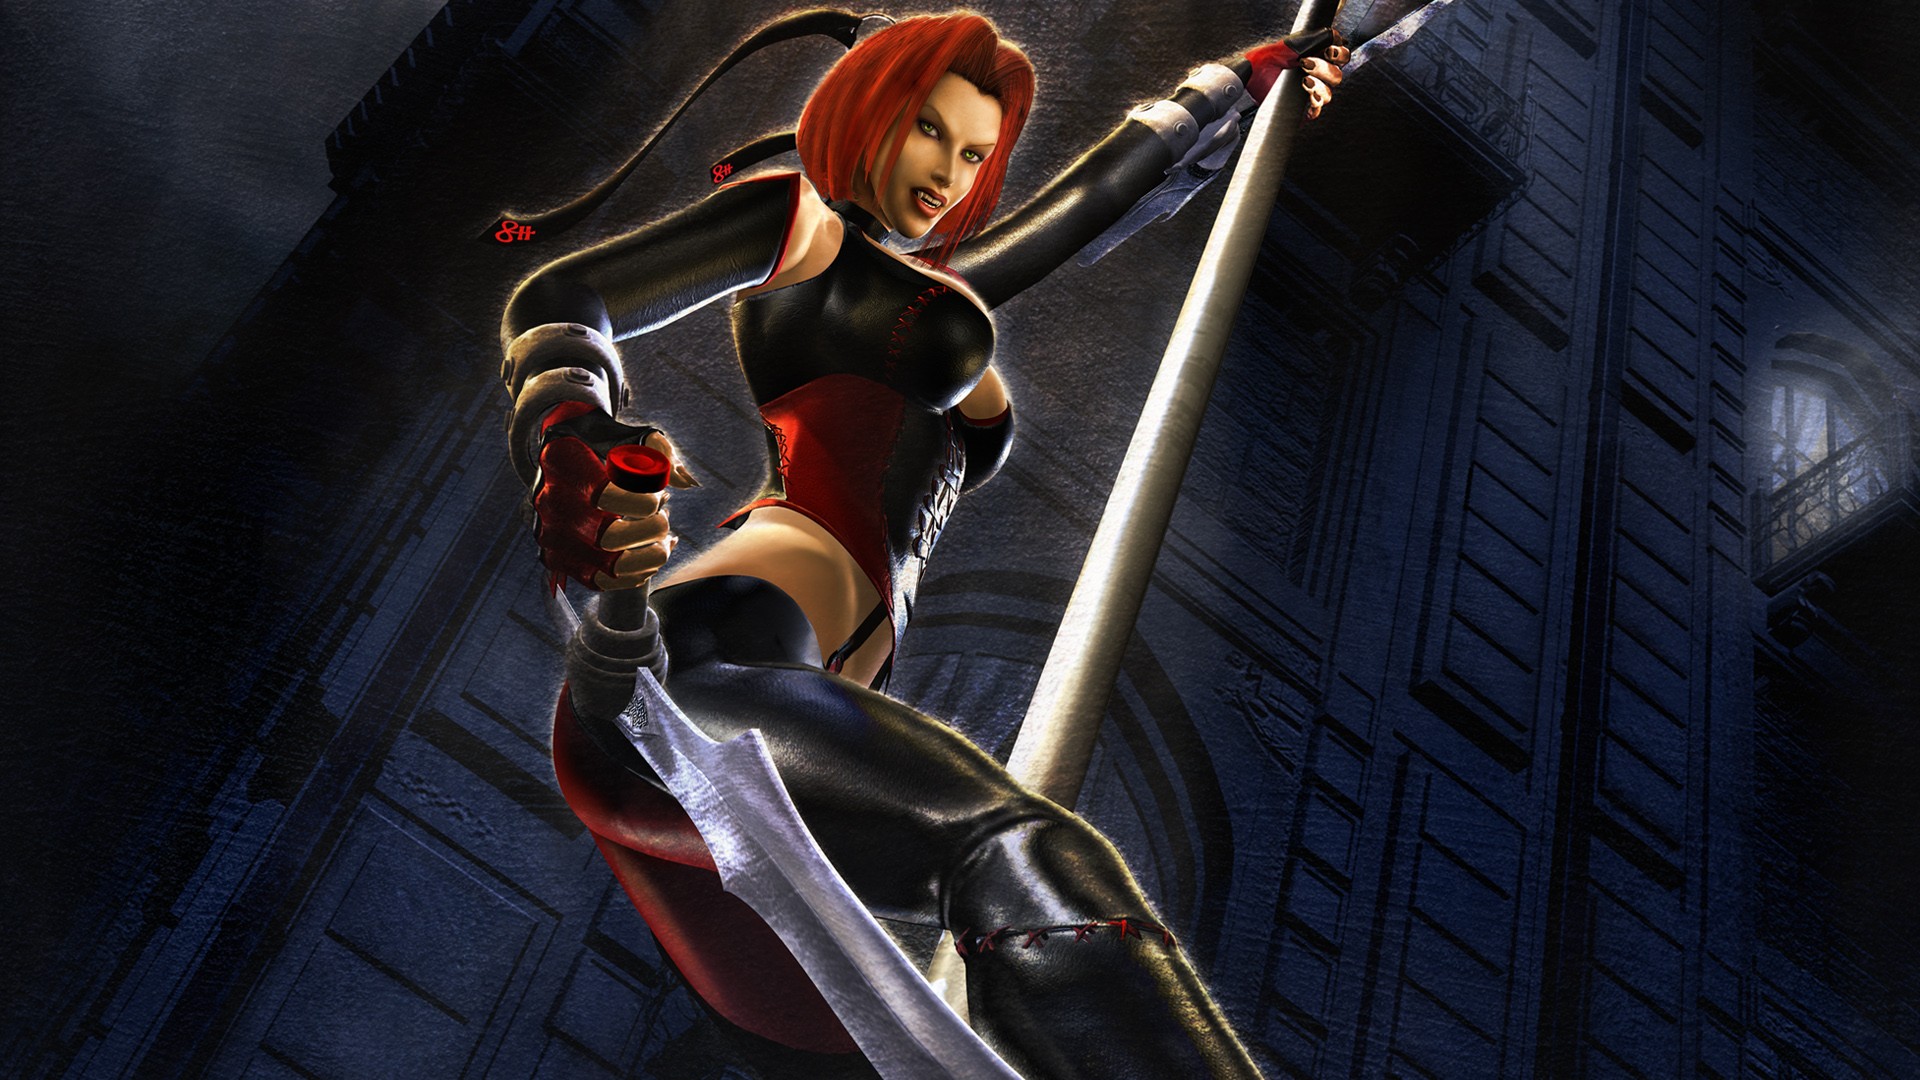 General 1920x1080 BloodRayne video games redhead video game art Damphir women PC gaming video game girls video game characters